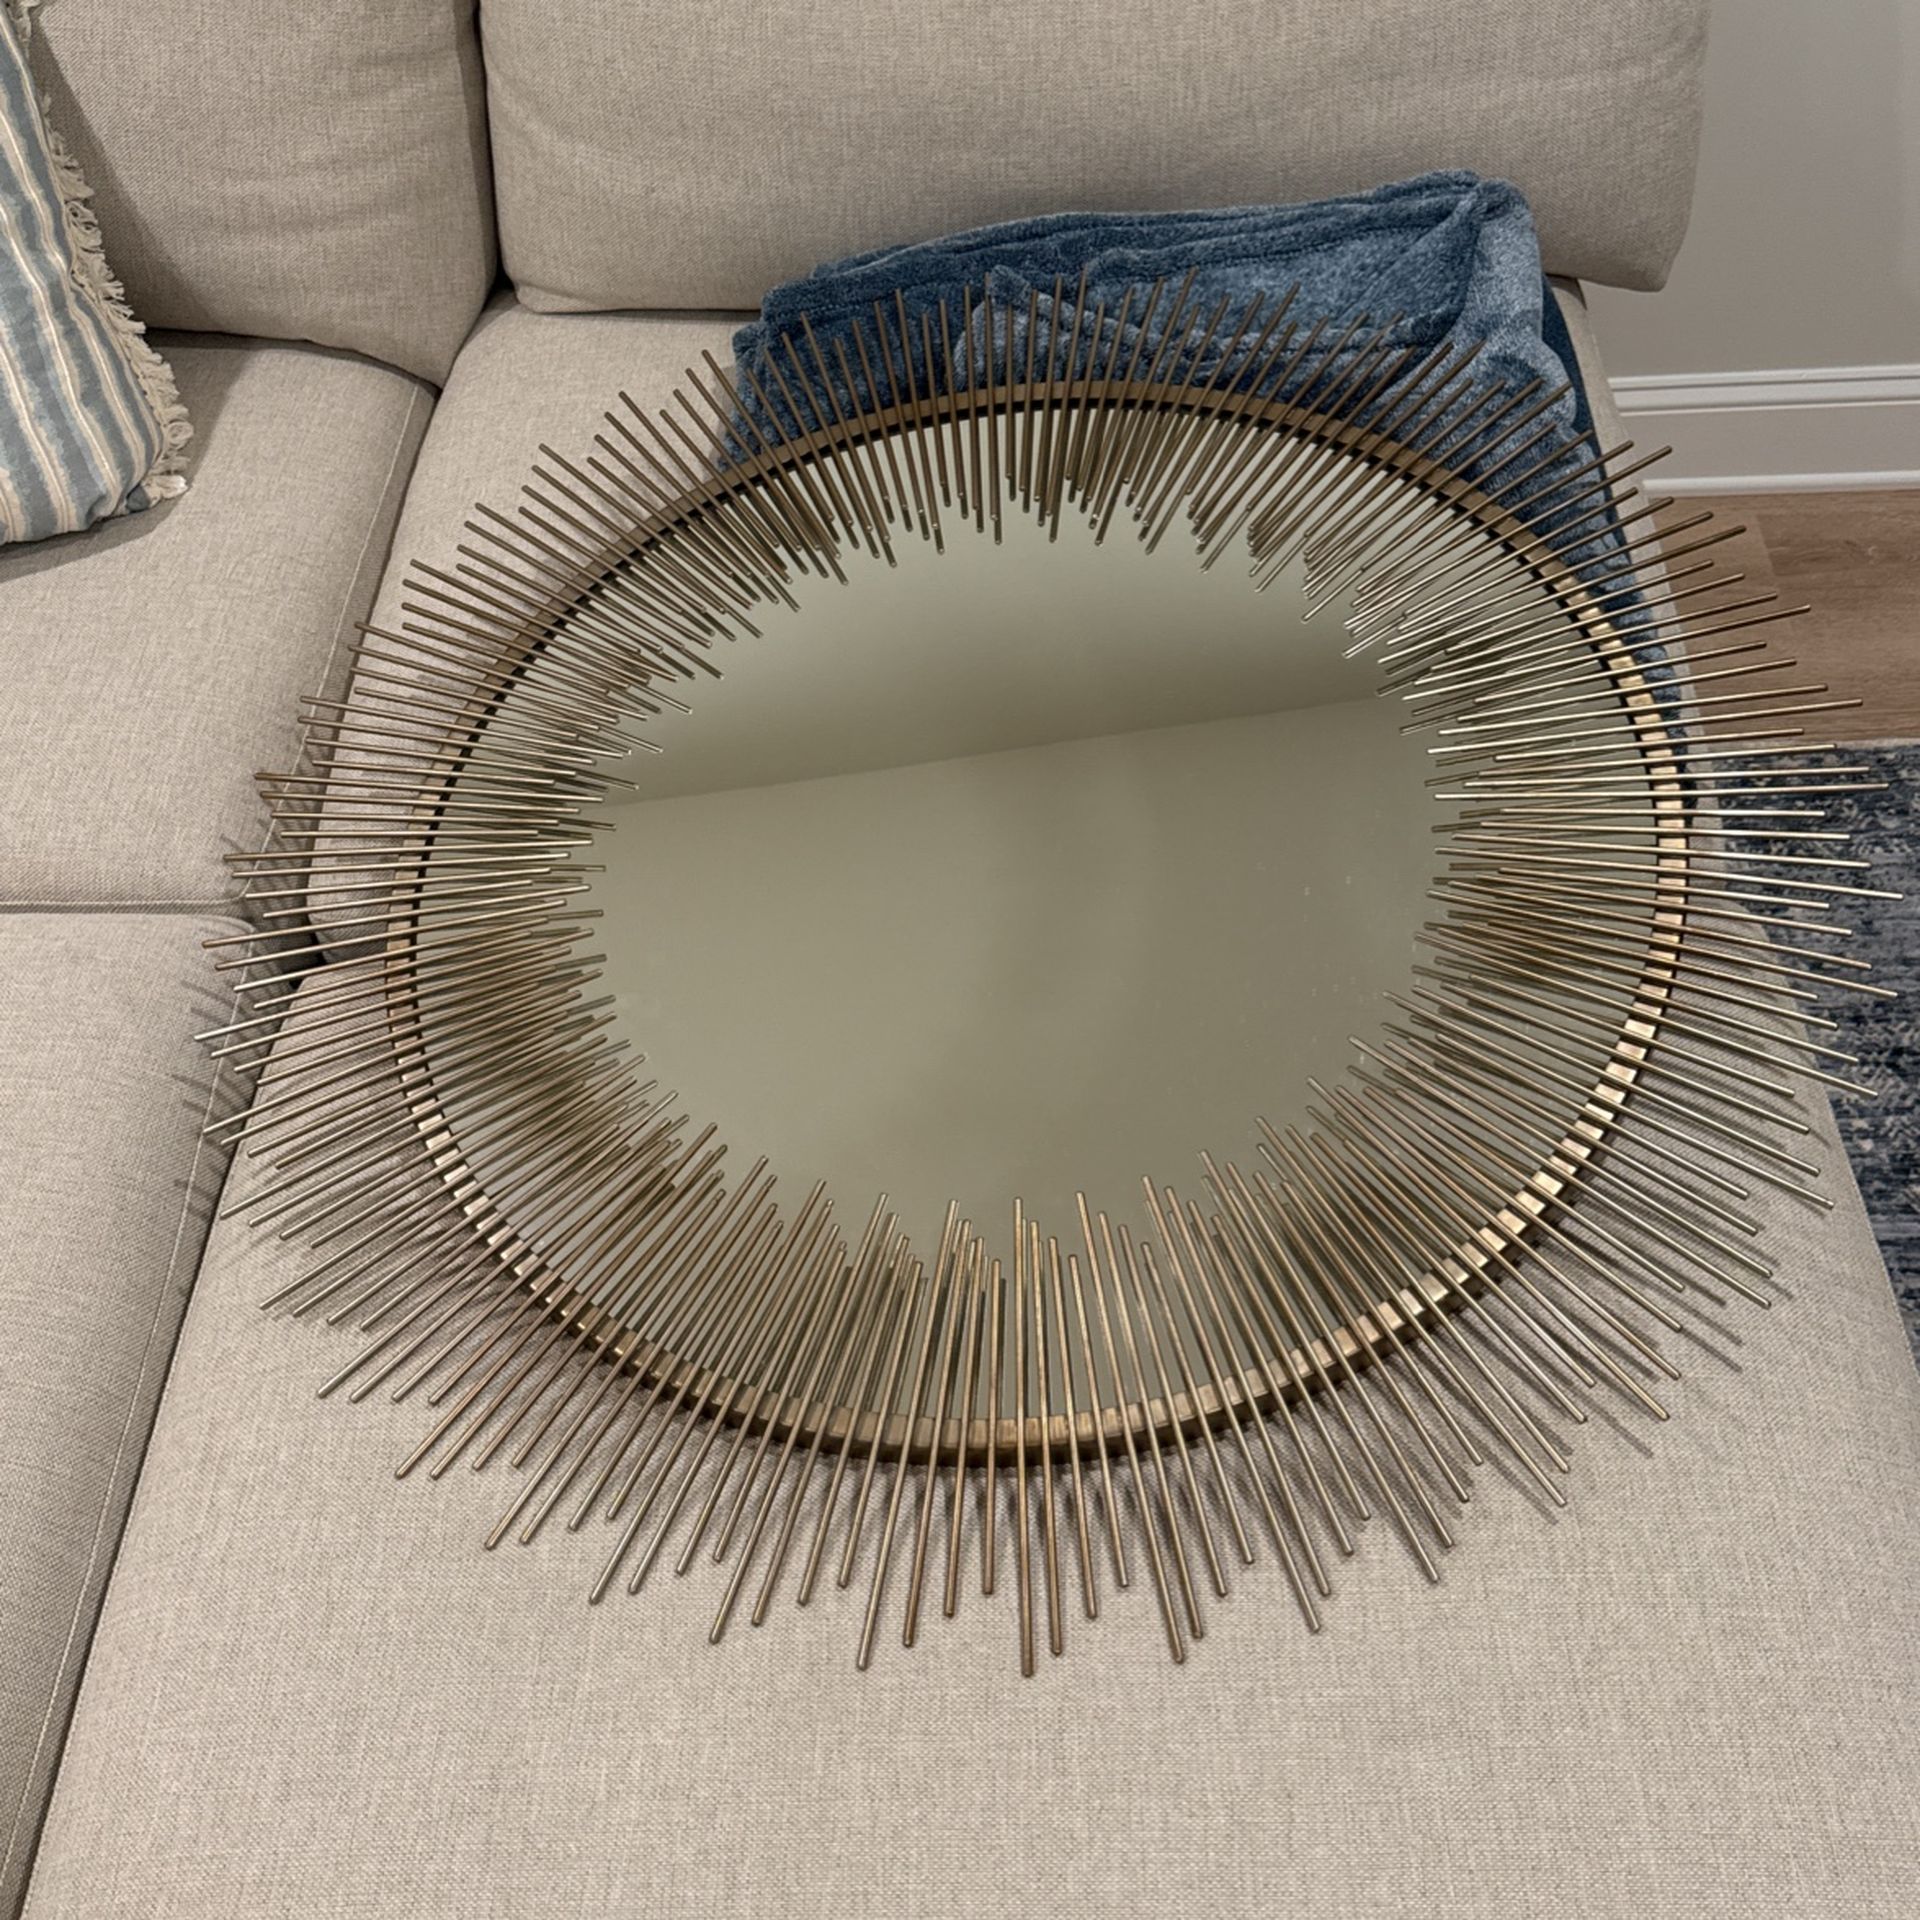 Round Gold Sun Mirror From Bassett Furniture 